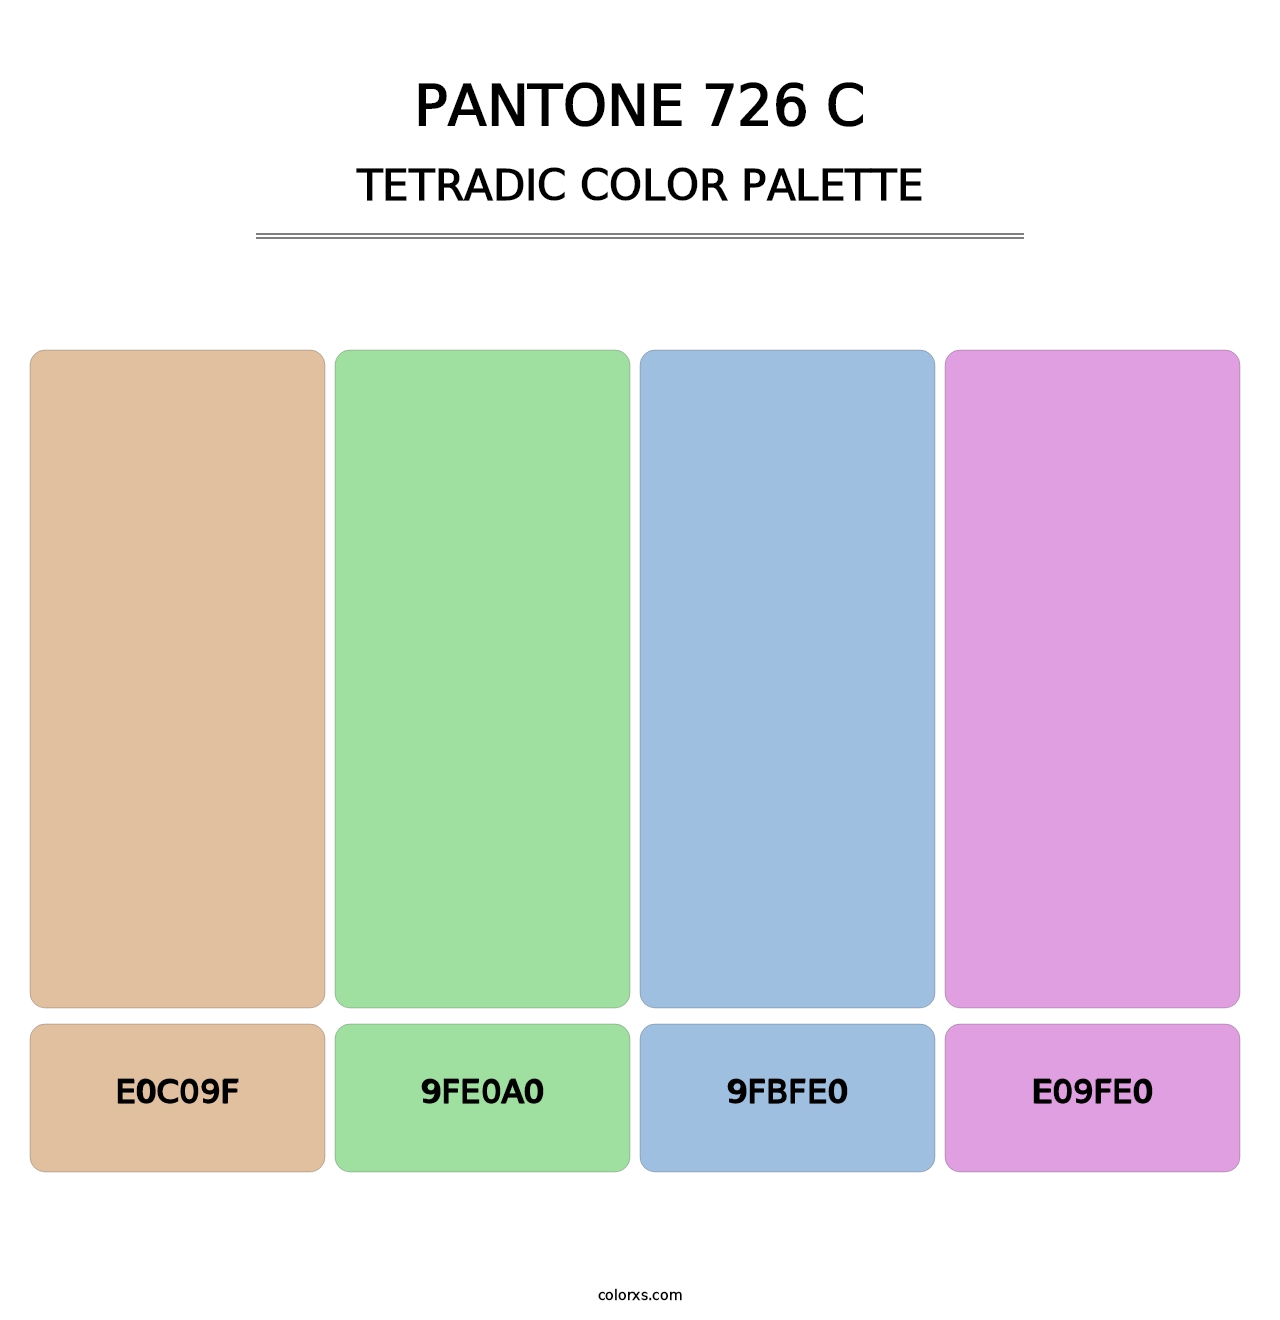 PANTONE 726 C - Tetradic Color Palette